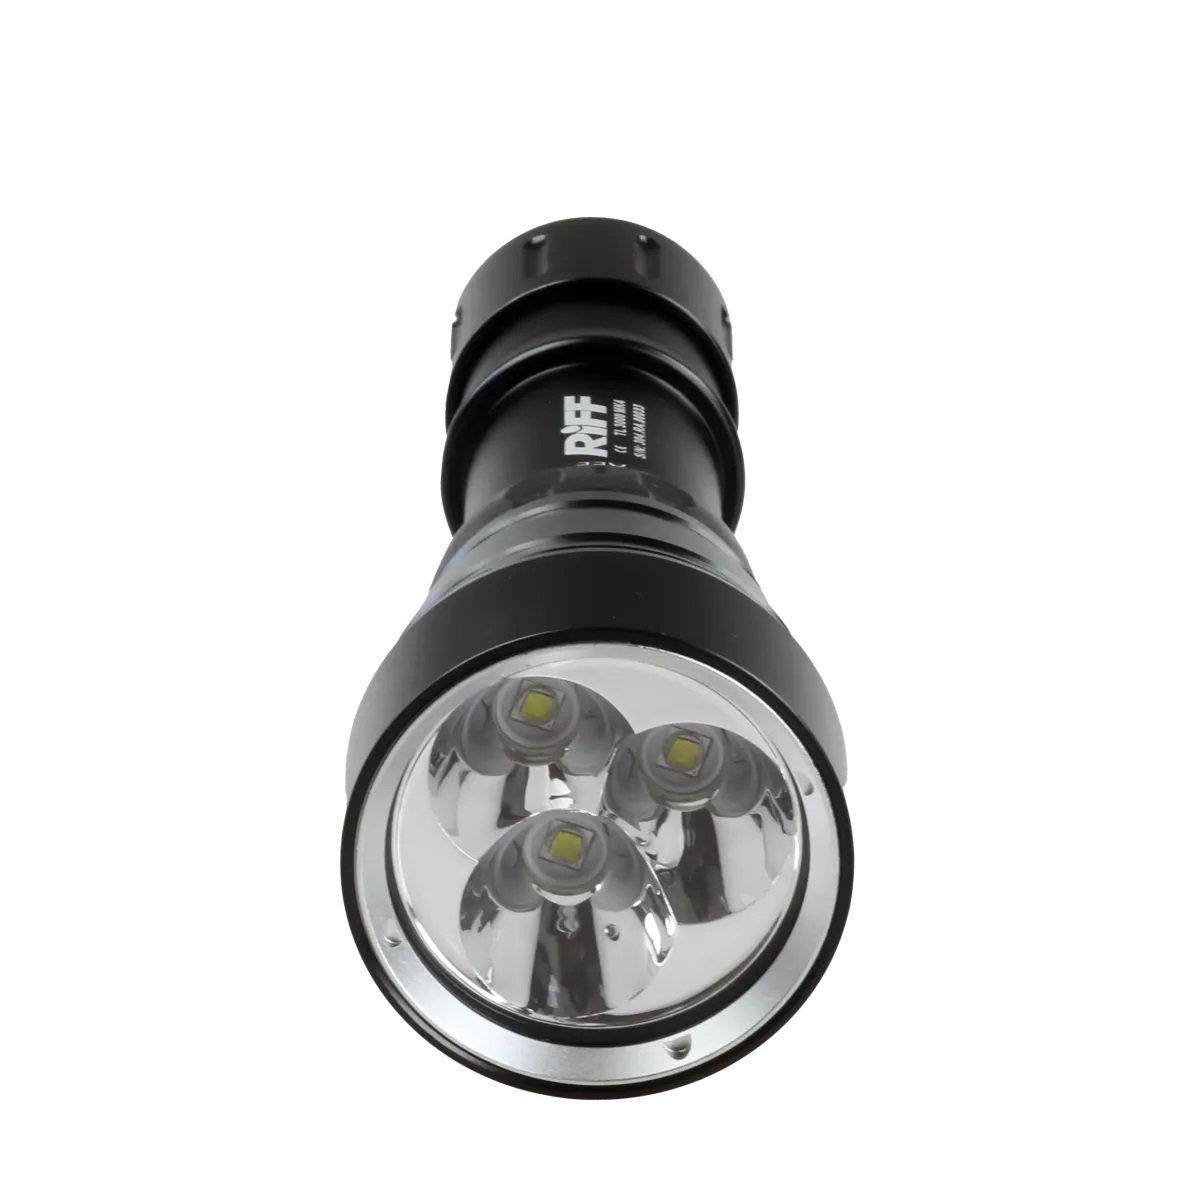 RIFF TL 3000 MK4 Spotlicht Tauchlampe Taucherlampe